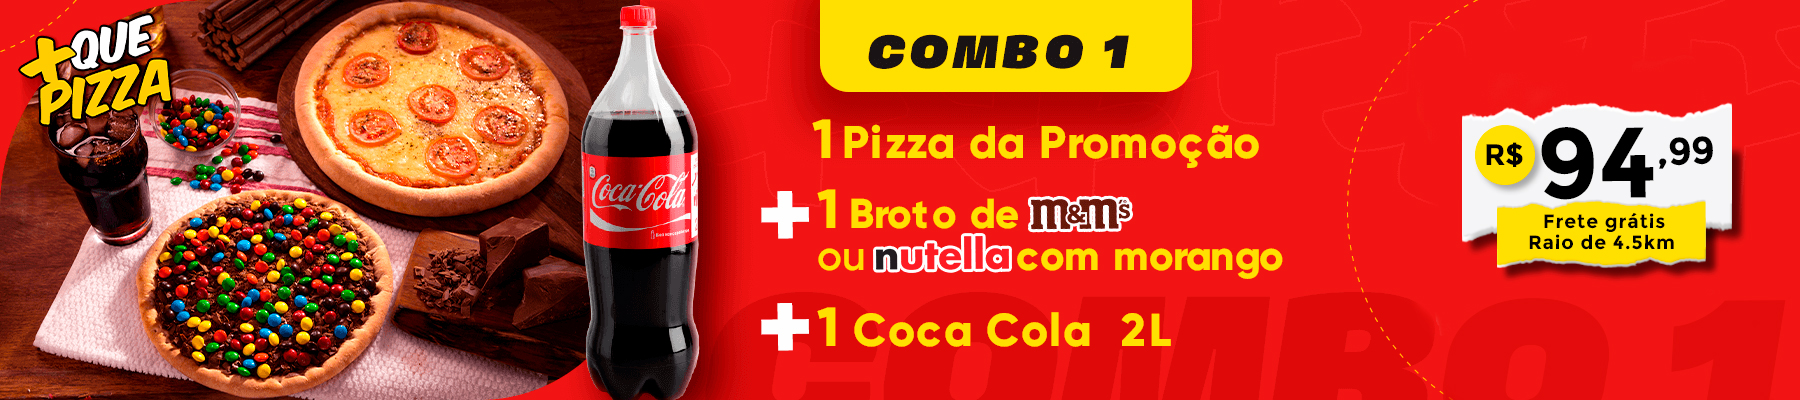 [+Que-Pizza]-Combo-1-Banner-Web-1800x400